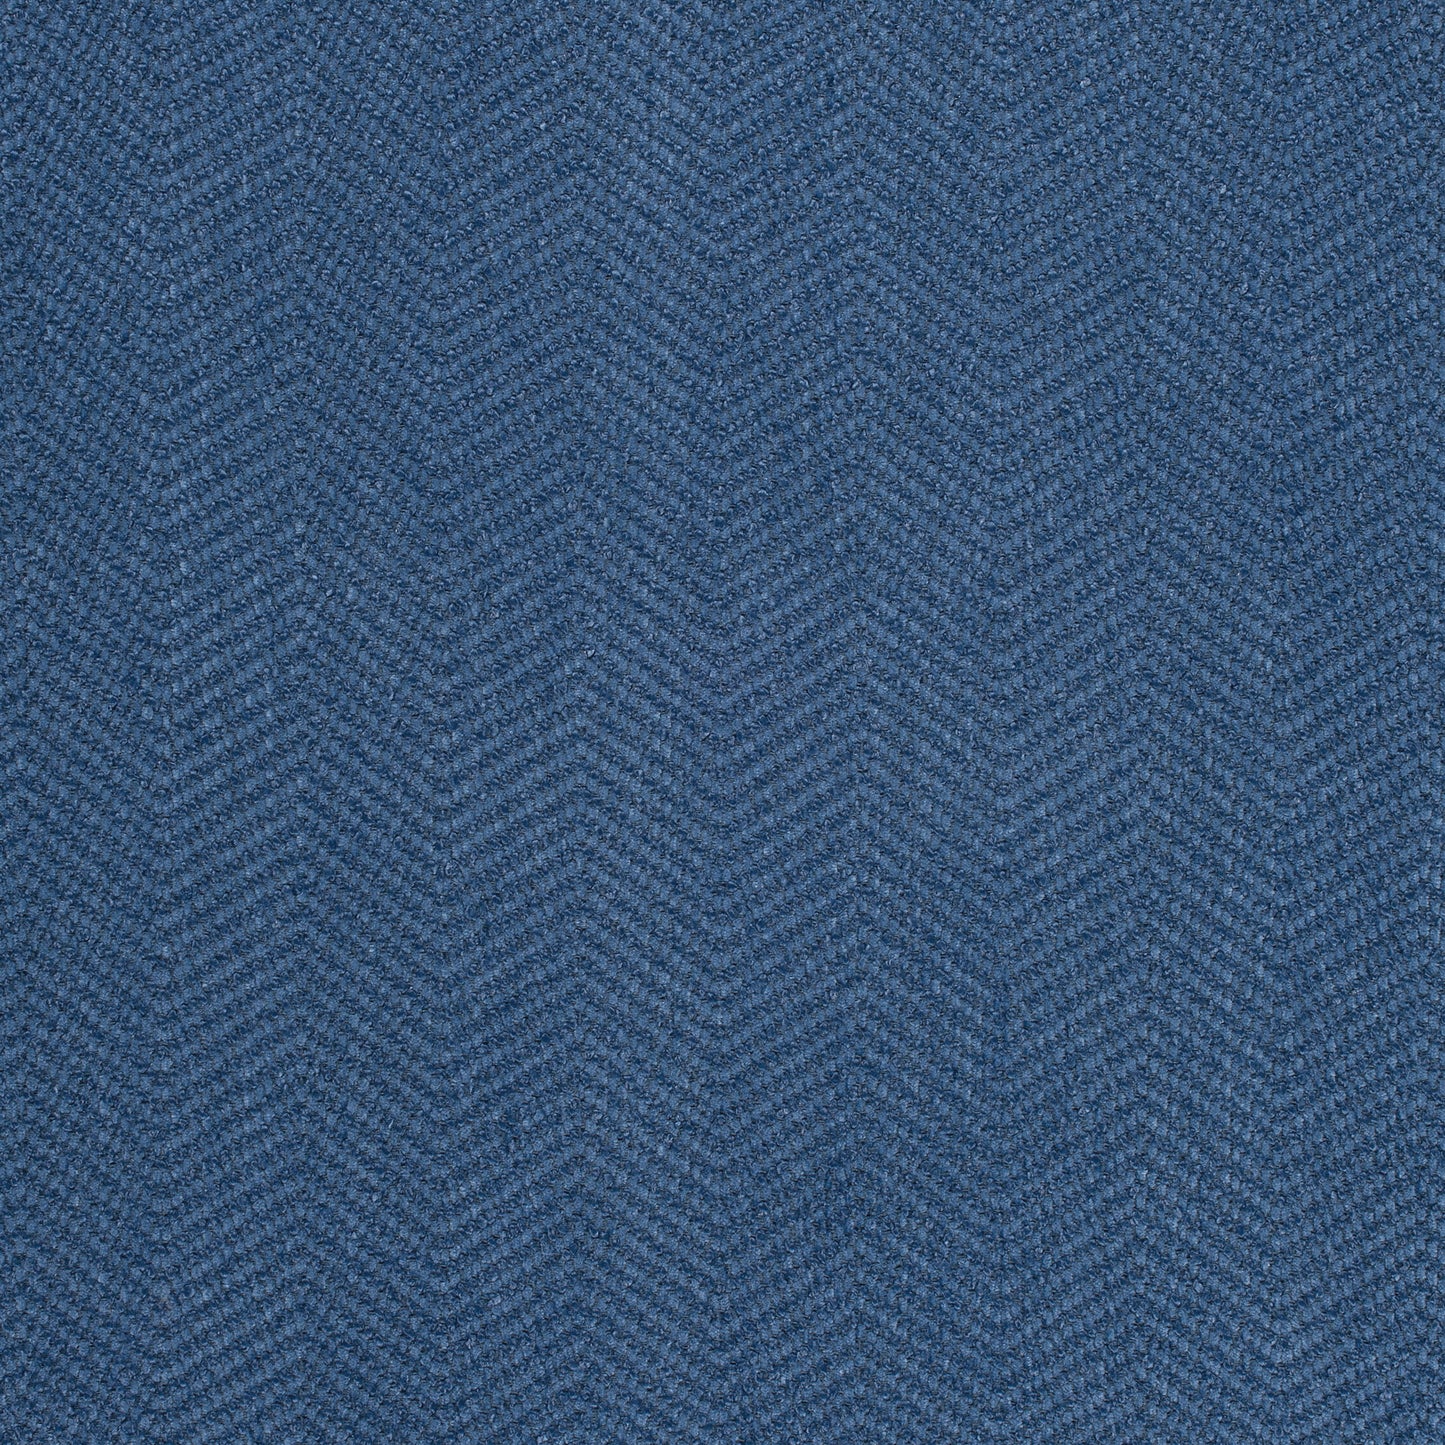 Purchase Thibaut Fabric Pattern# W80629 pattern name Dalton Herringbone color Royal Blue